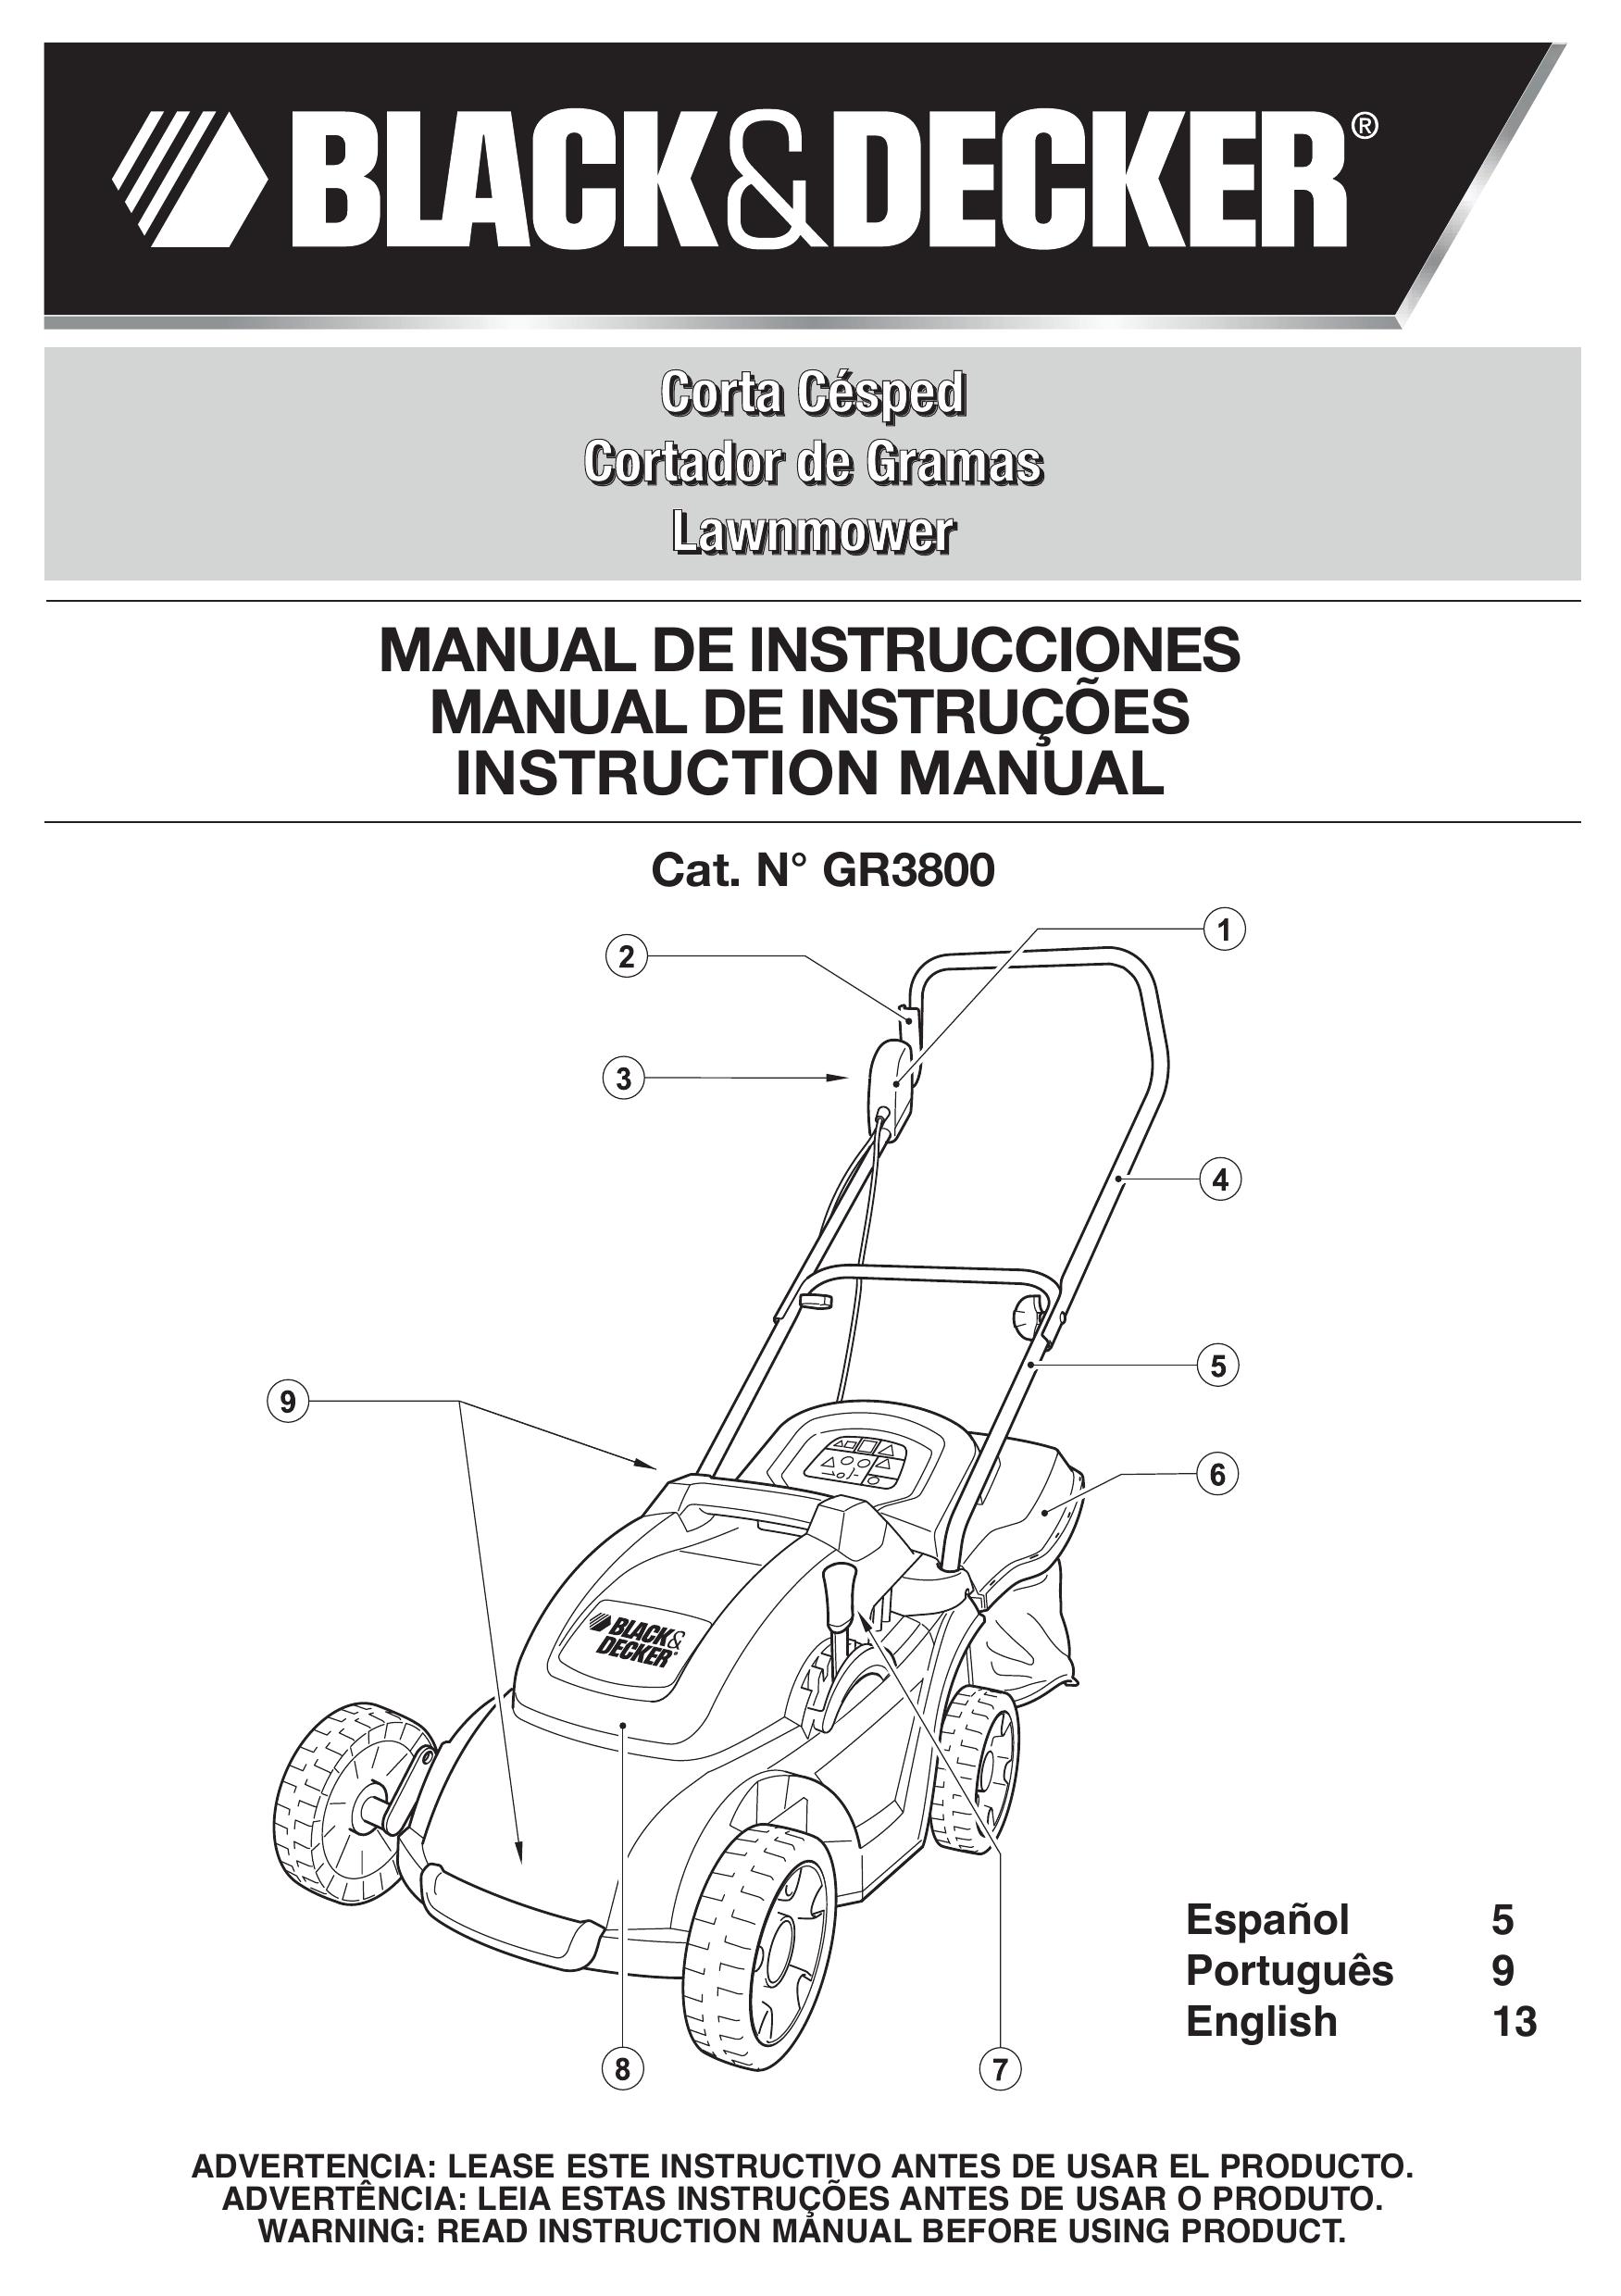 Black & Decker 661817-00 Lawn Mower User Manual